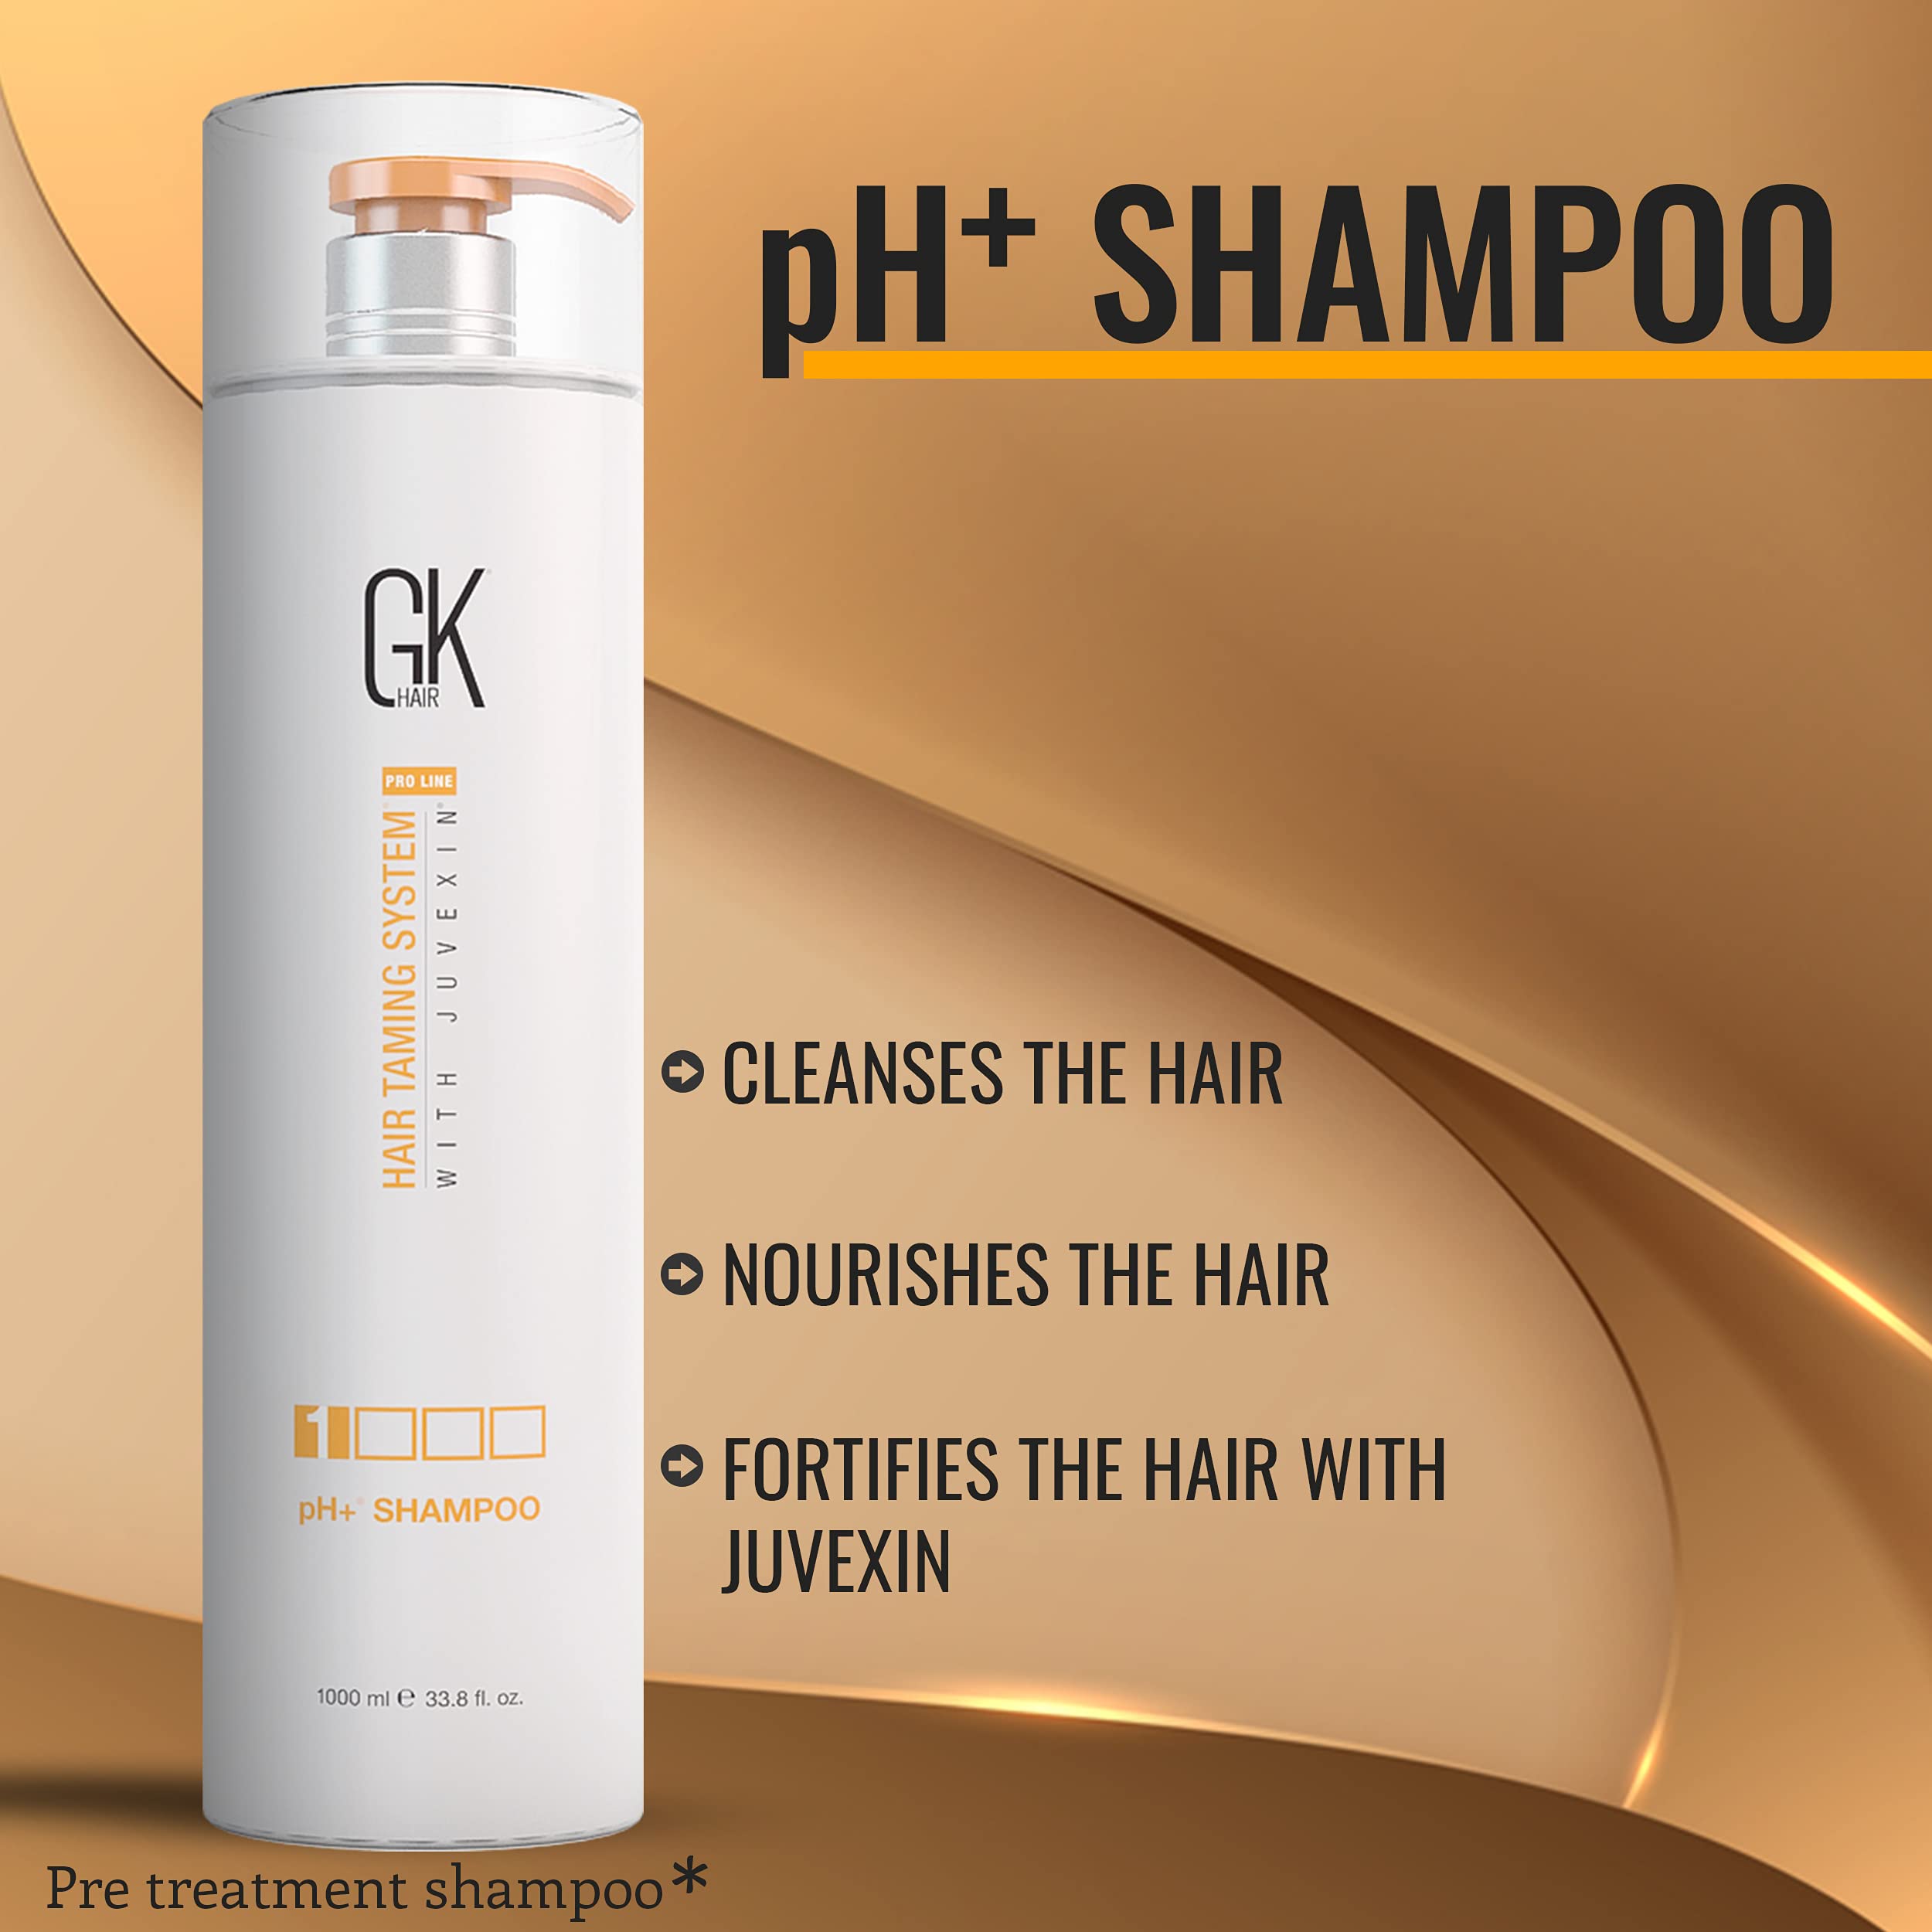 Global Keratin GK HAIR pH+ Pre-Treatment Clarifying Shampoo (33.8 Fl Oz/1000ml) For Preps Hair Deep Cleansing,Removes Impurities -With Aloe Vera, Vitamins & Natural Oils All Hair Types Men and Women